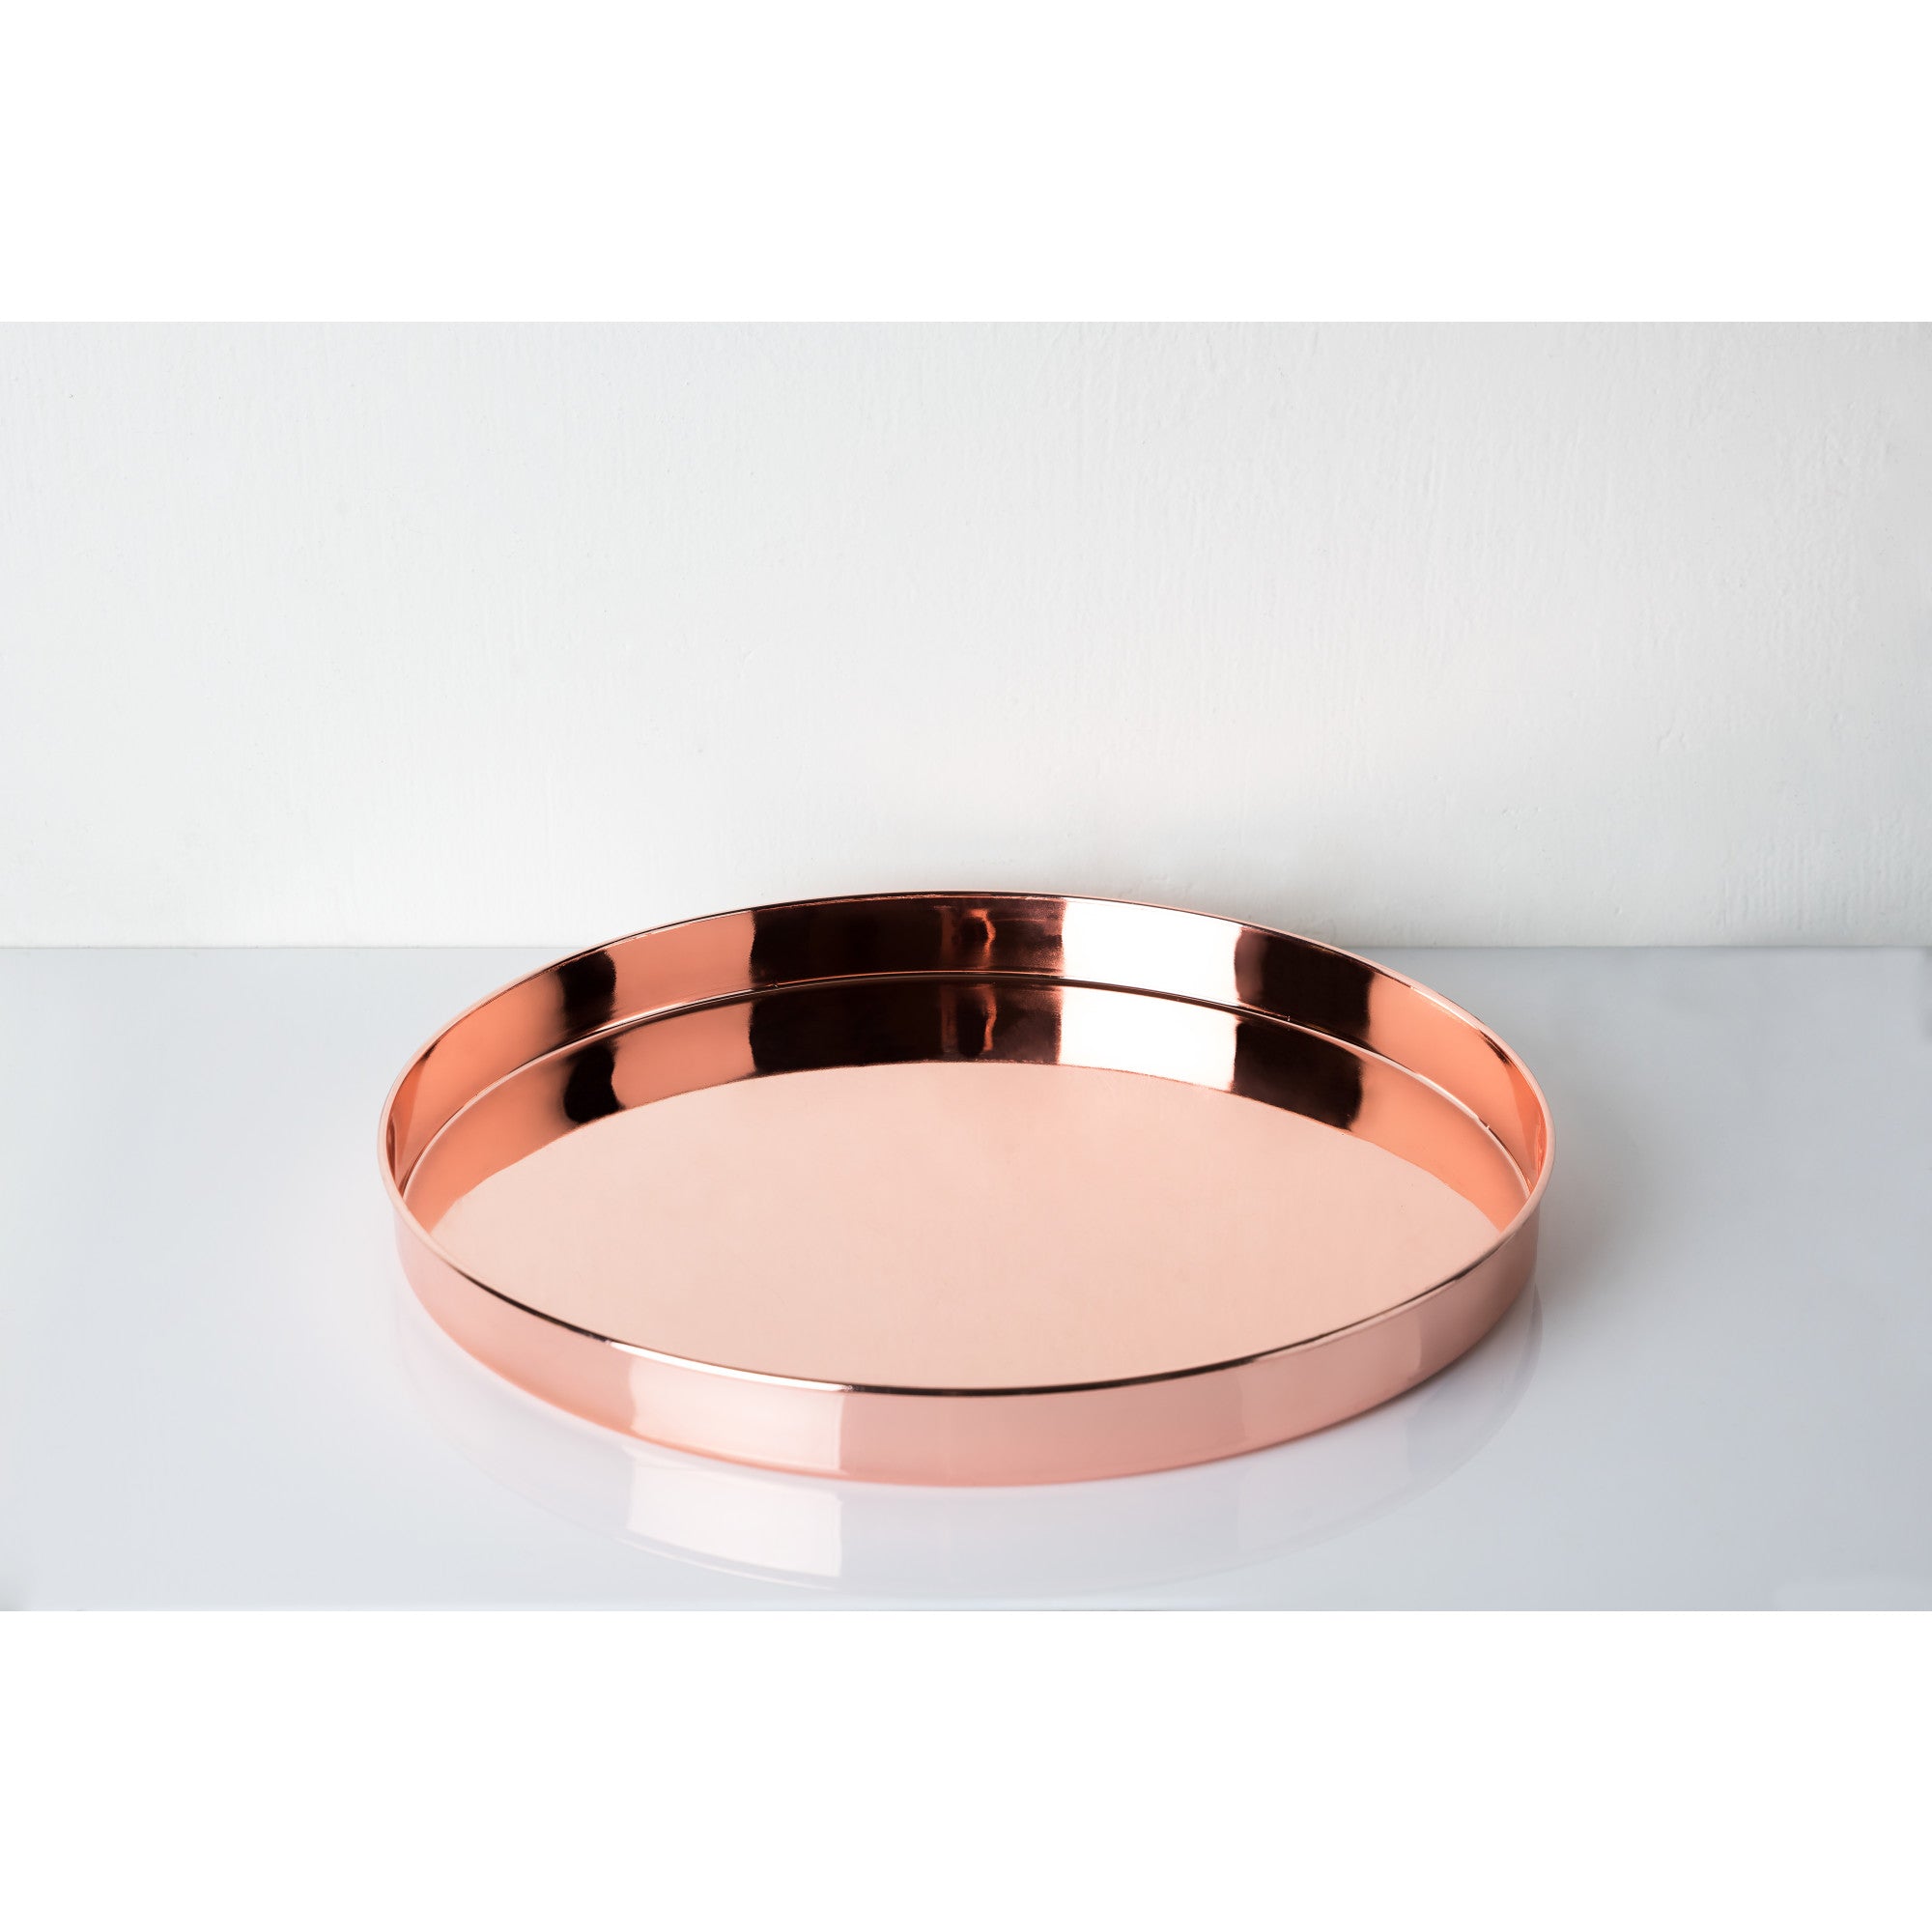 Round Copper Serving Tray by Viski® (4951) Serveware Viski